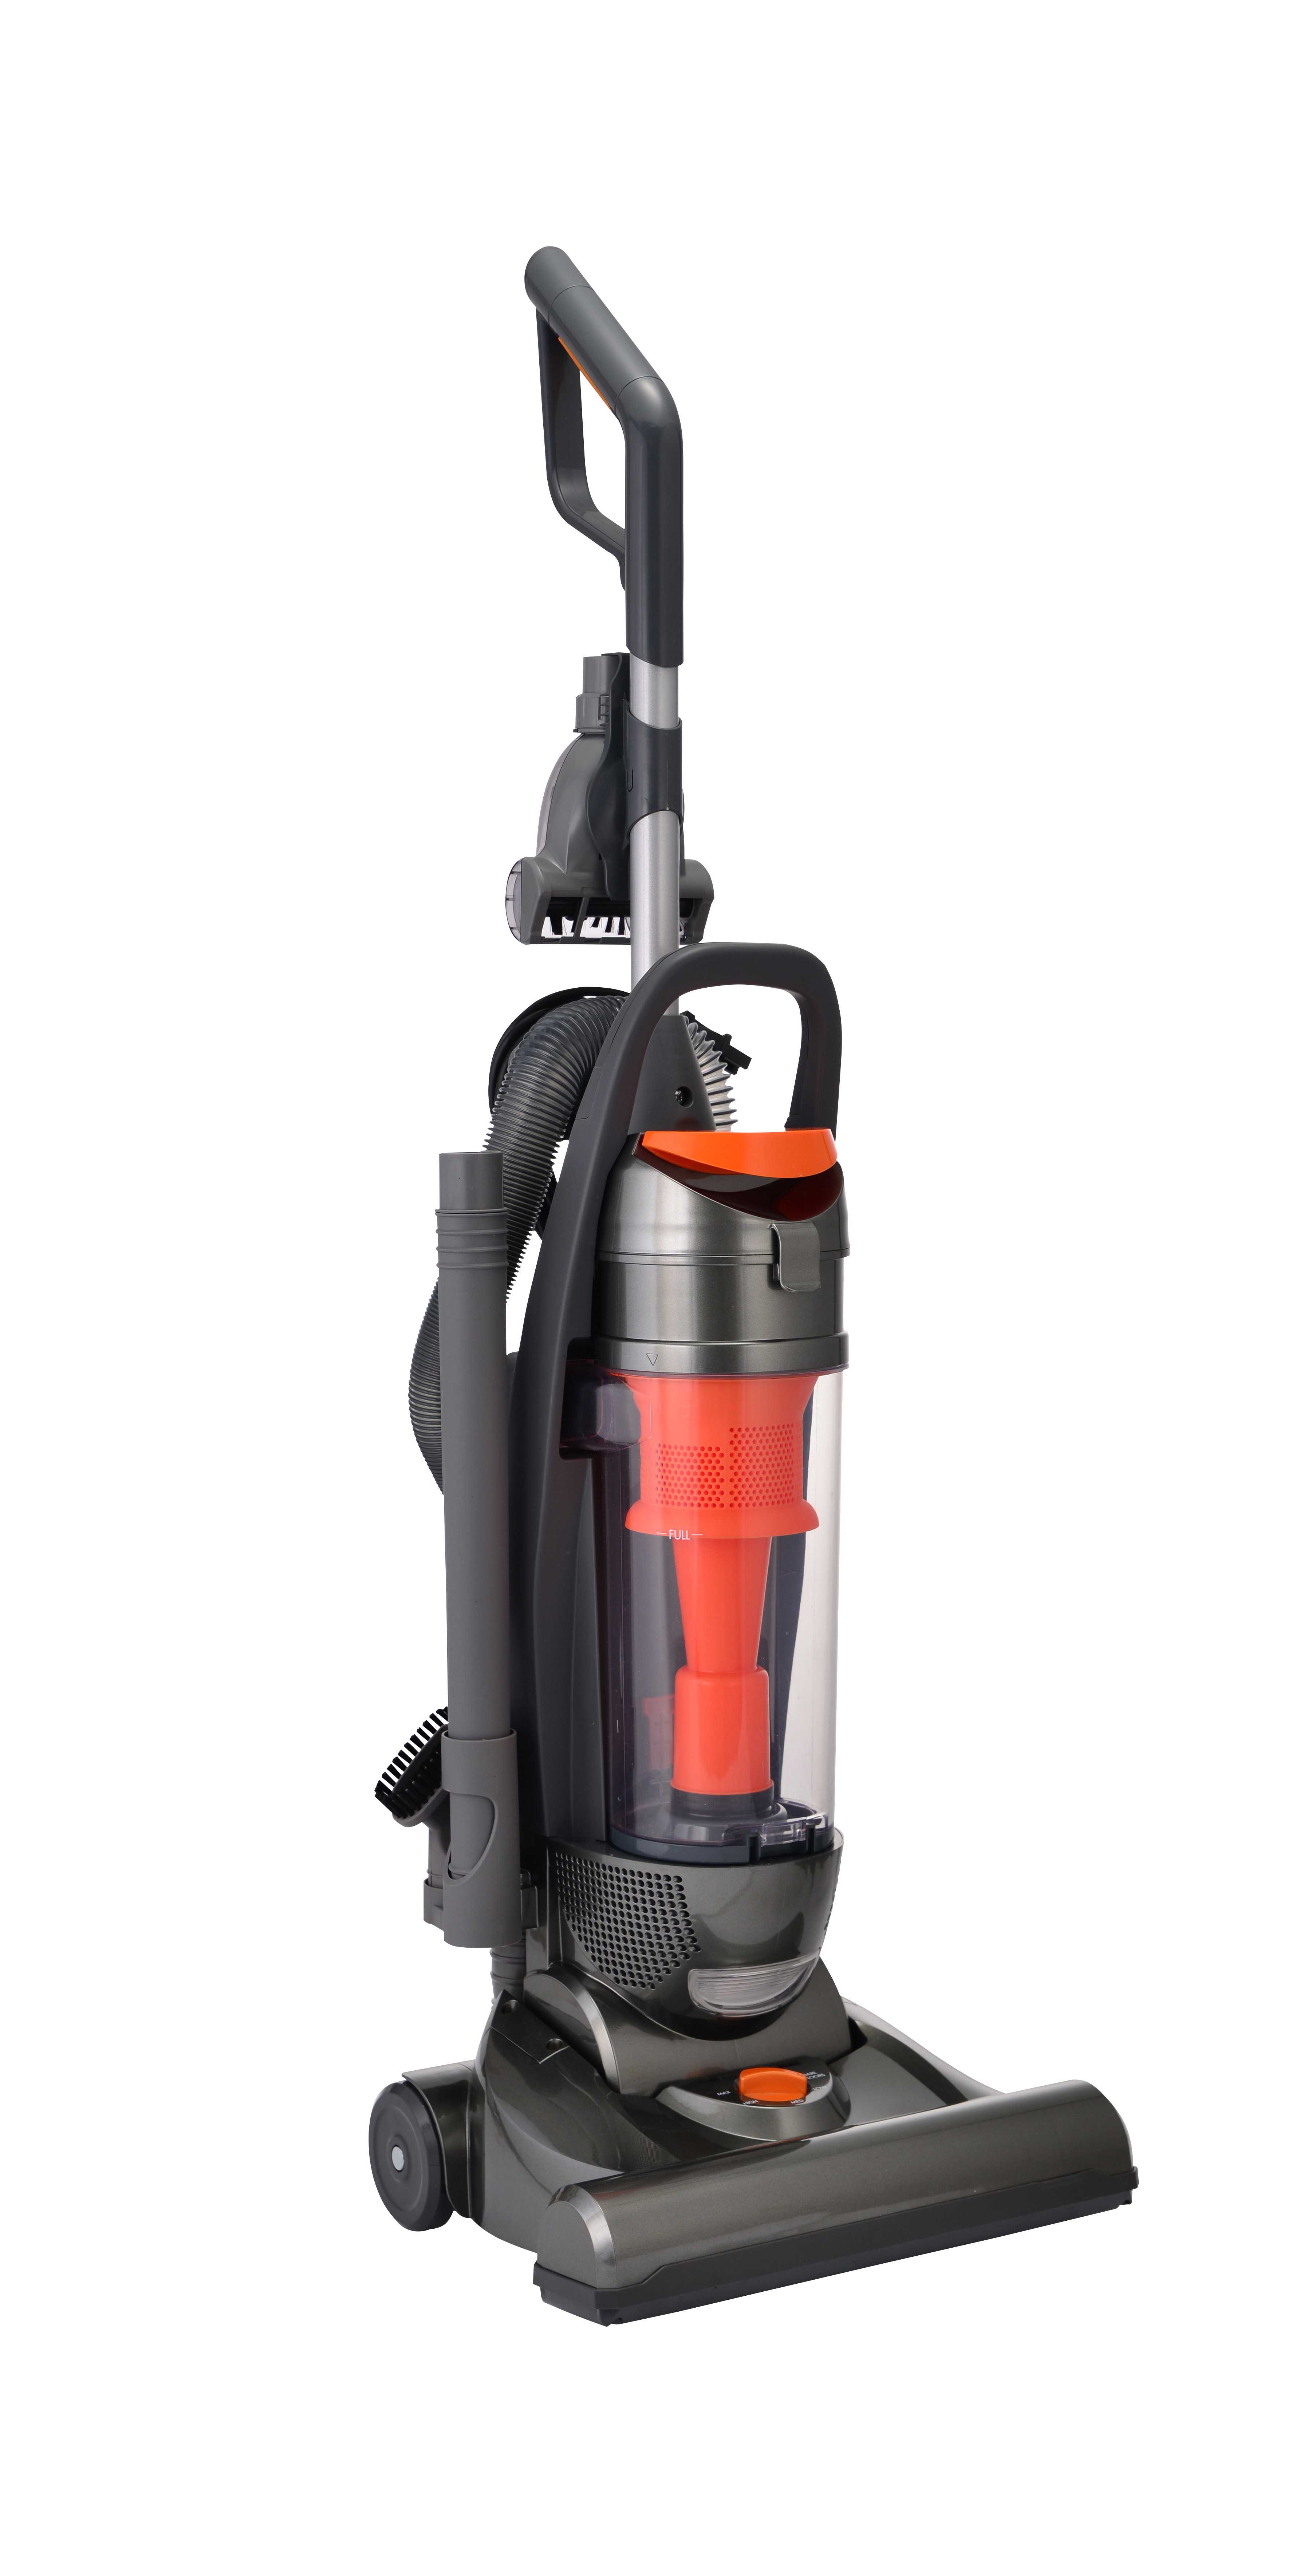 CJ99B Upright Bagless Vacuum Cleaner